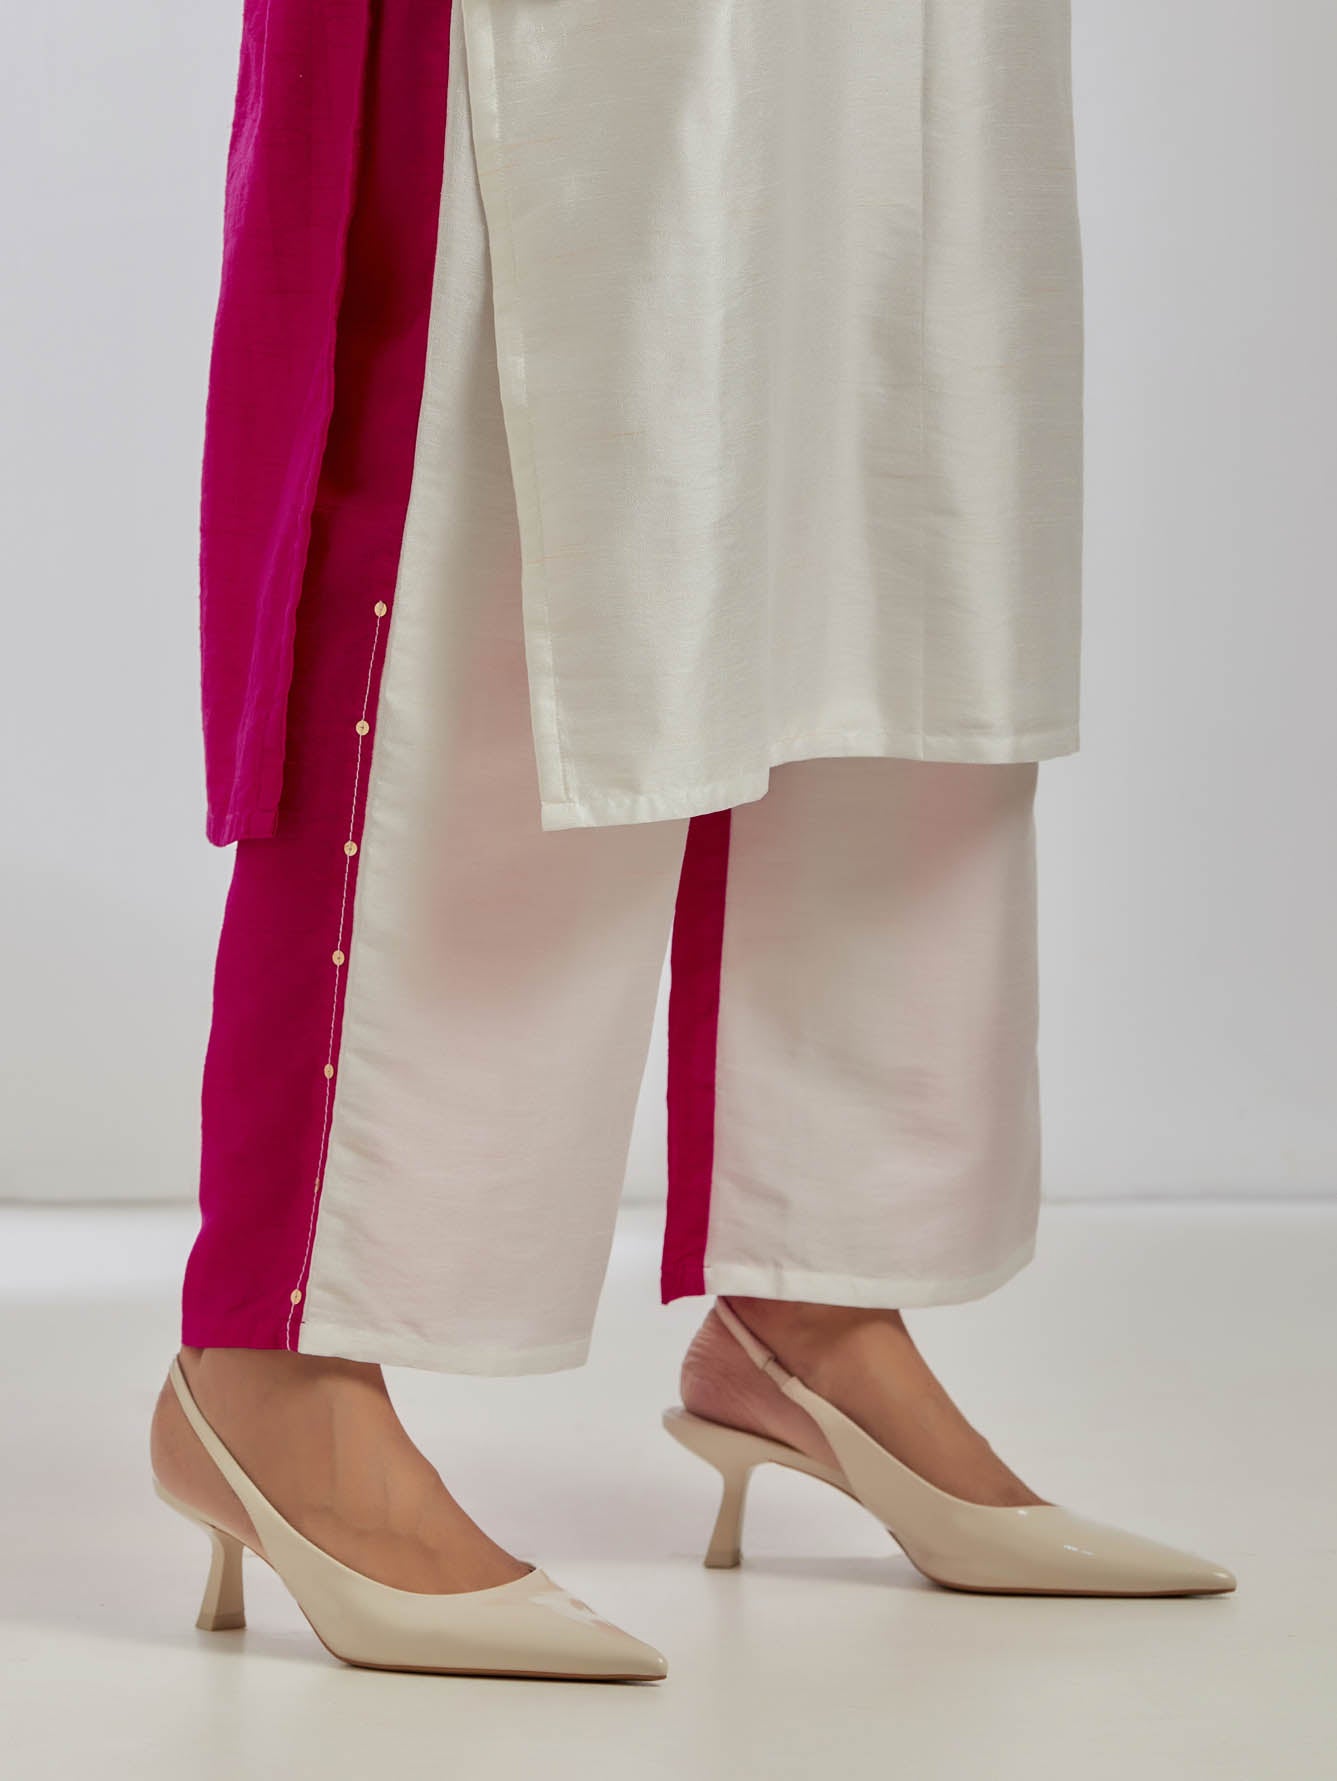 White/Pink Raw Silk Half And Half Kurta And Palazzo (Set Of 2) - The Indian Cause